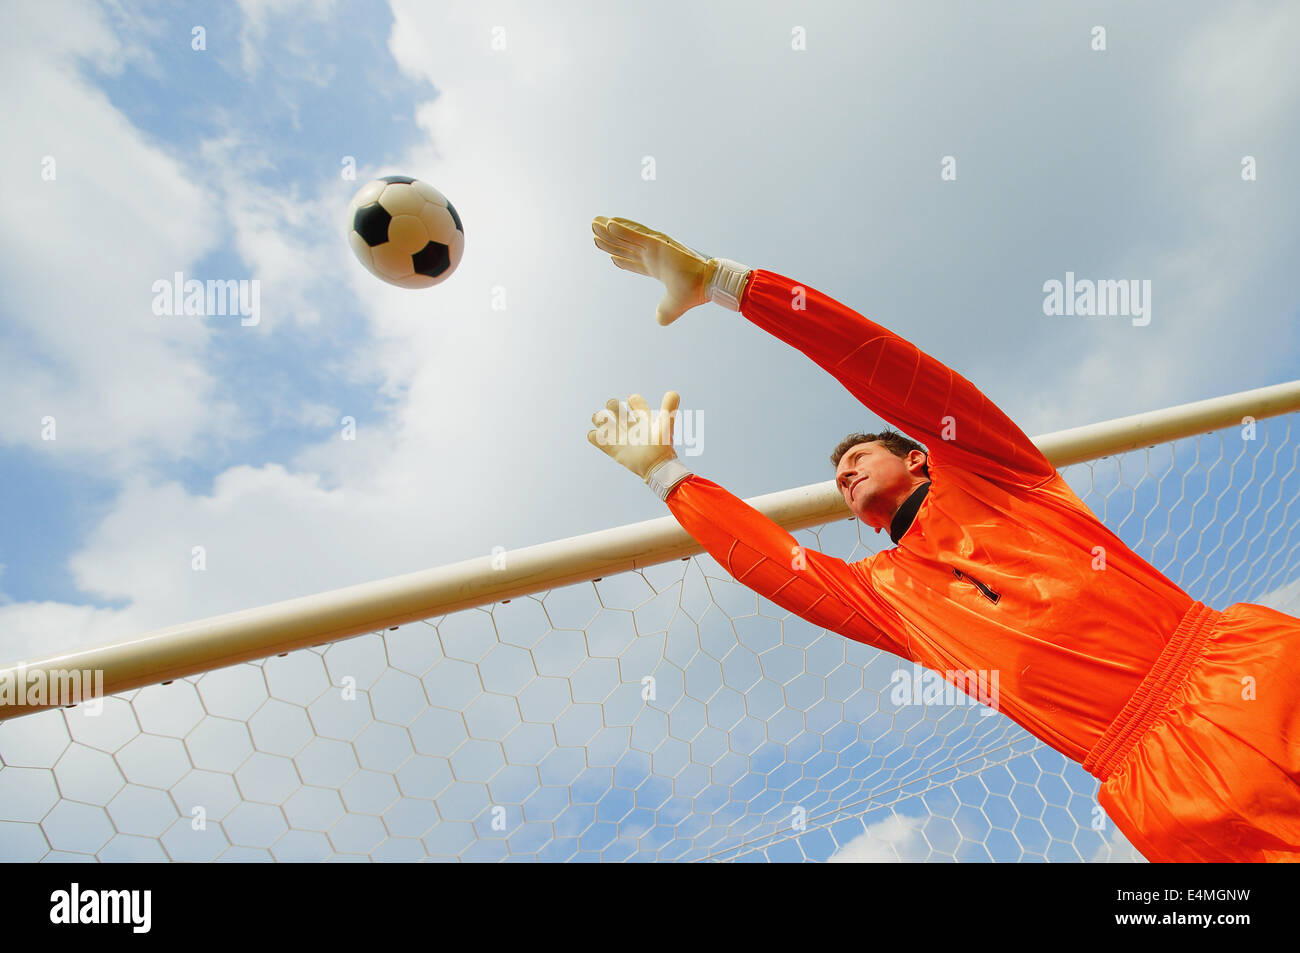 Goalkeeper in orange uniform catching the ball Stock Photo